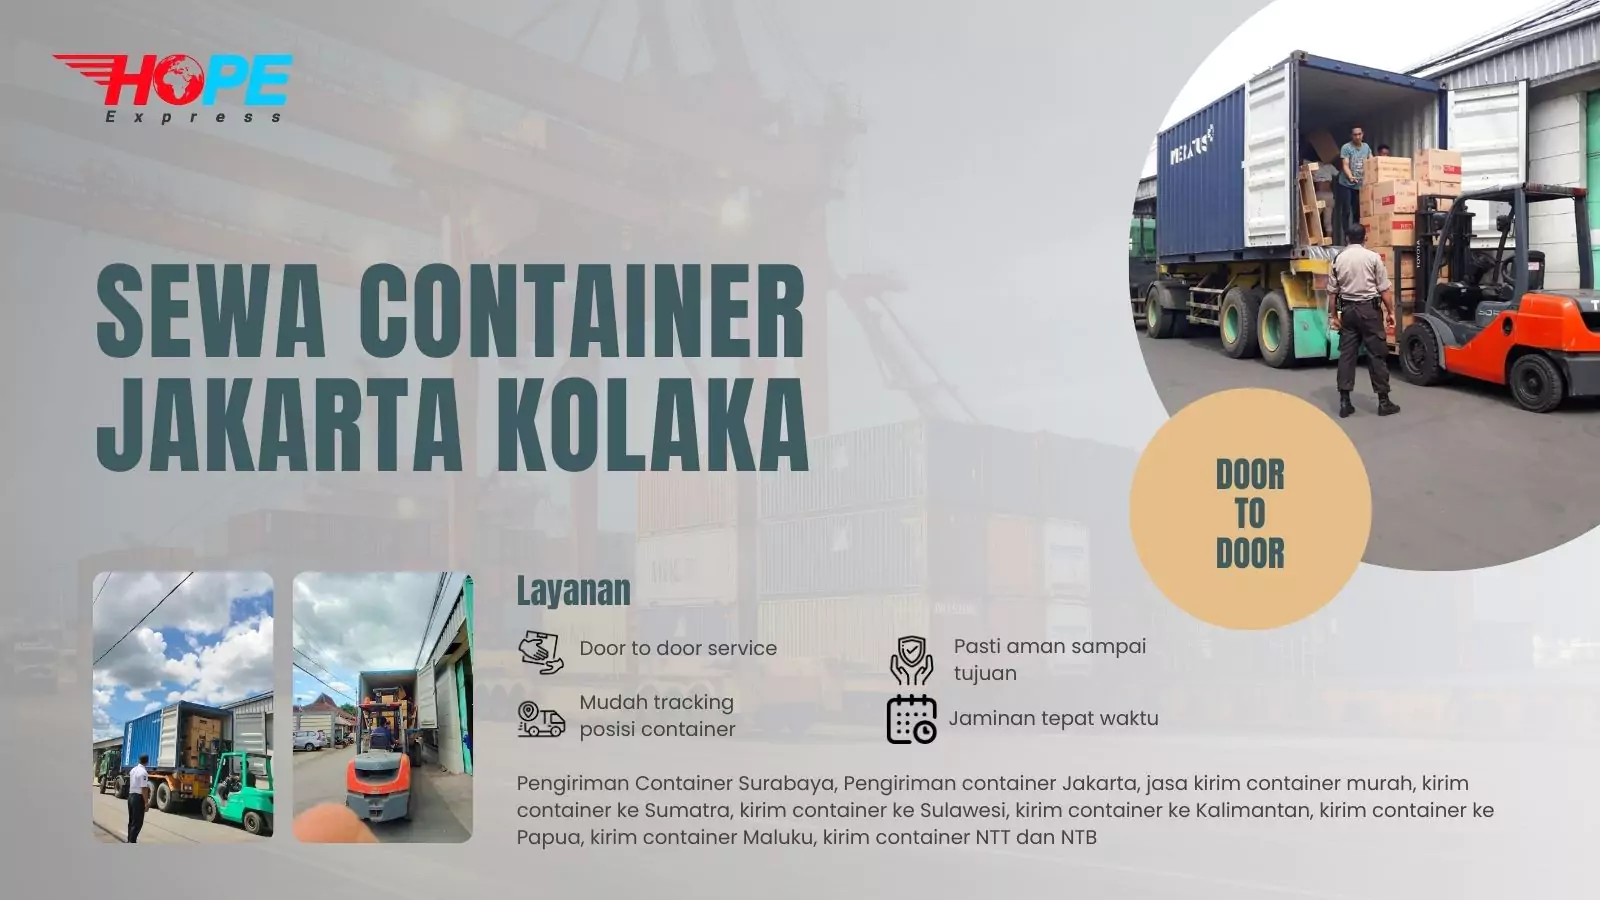 Sewa Container Jakarta Kolaka